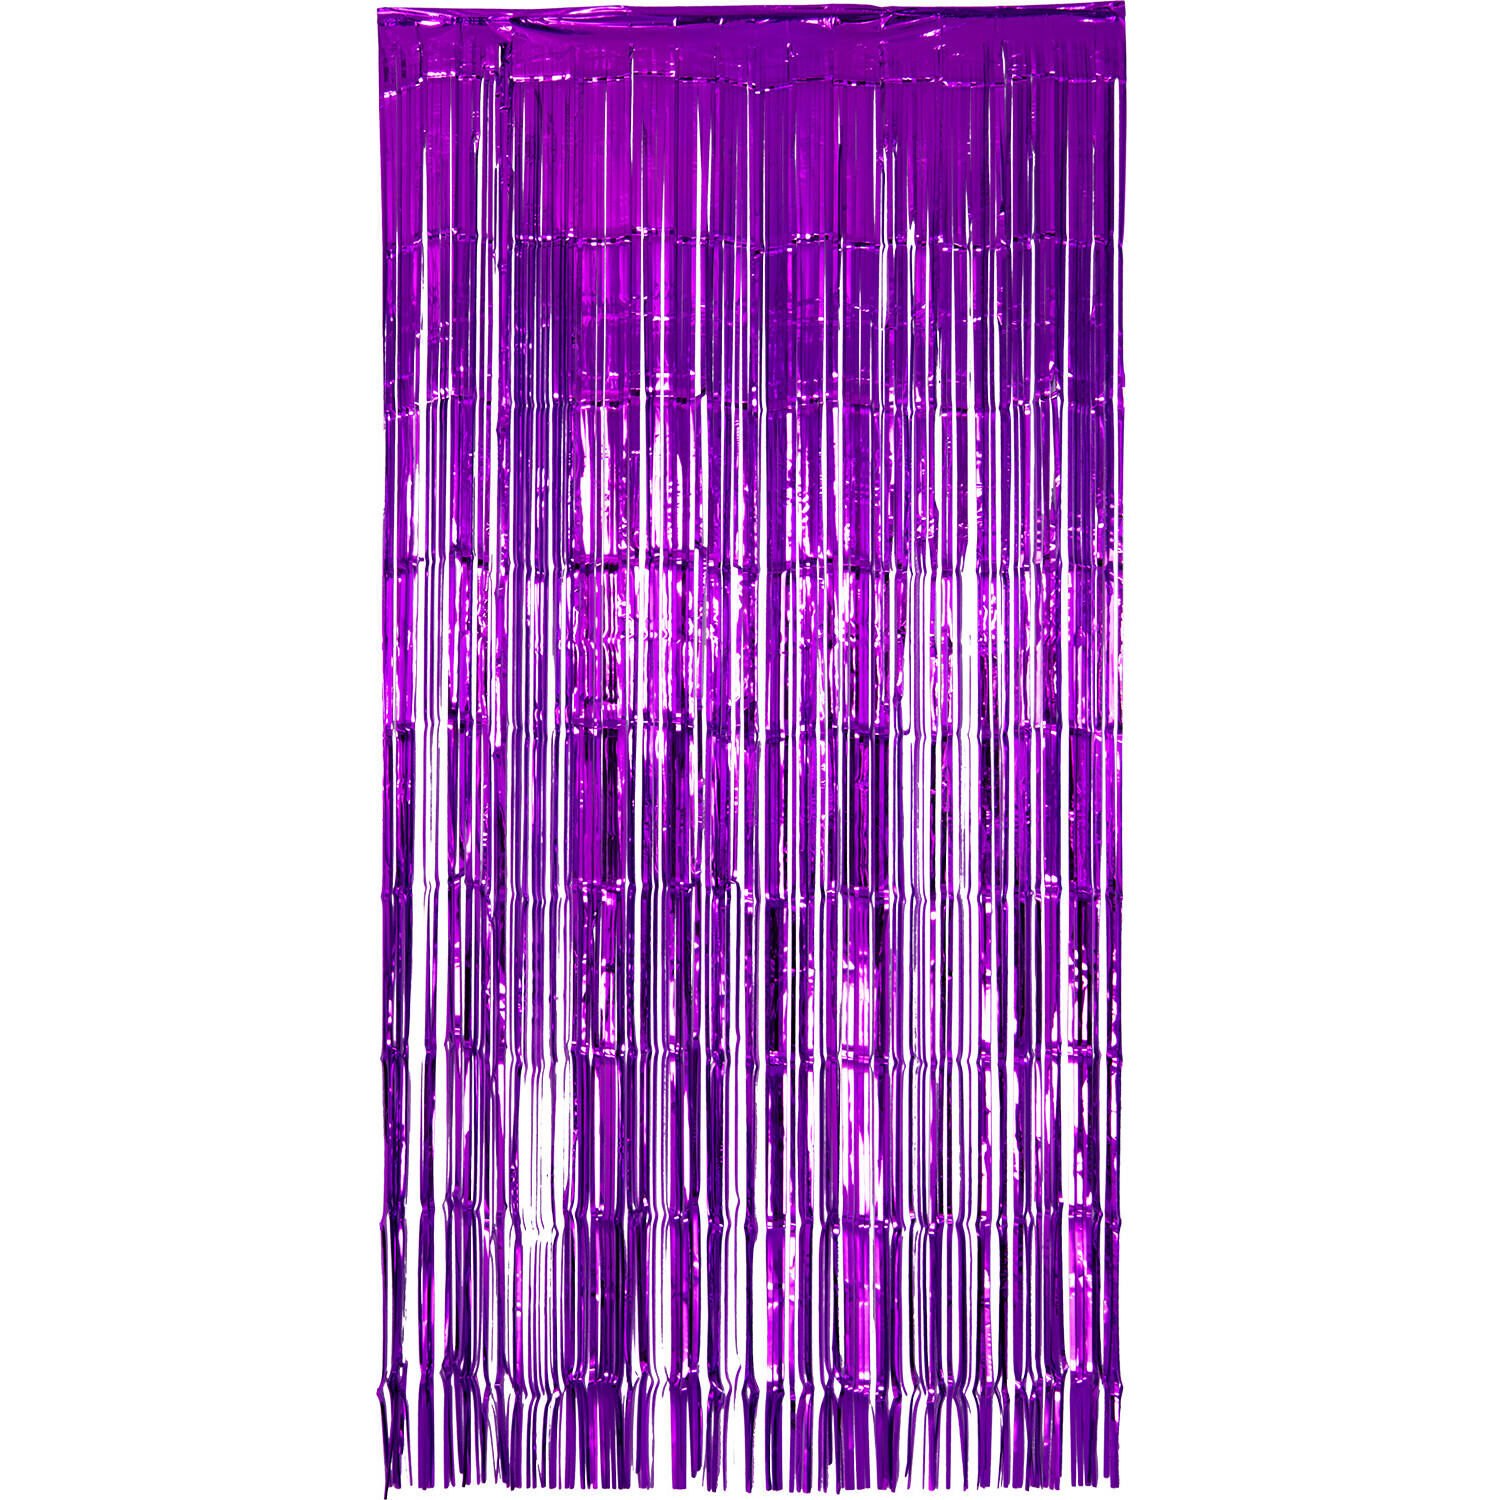 Trvorhang Lametta purple violet, 2 x 1 m